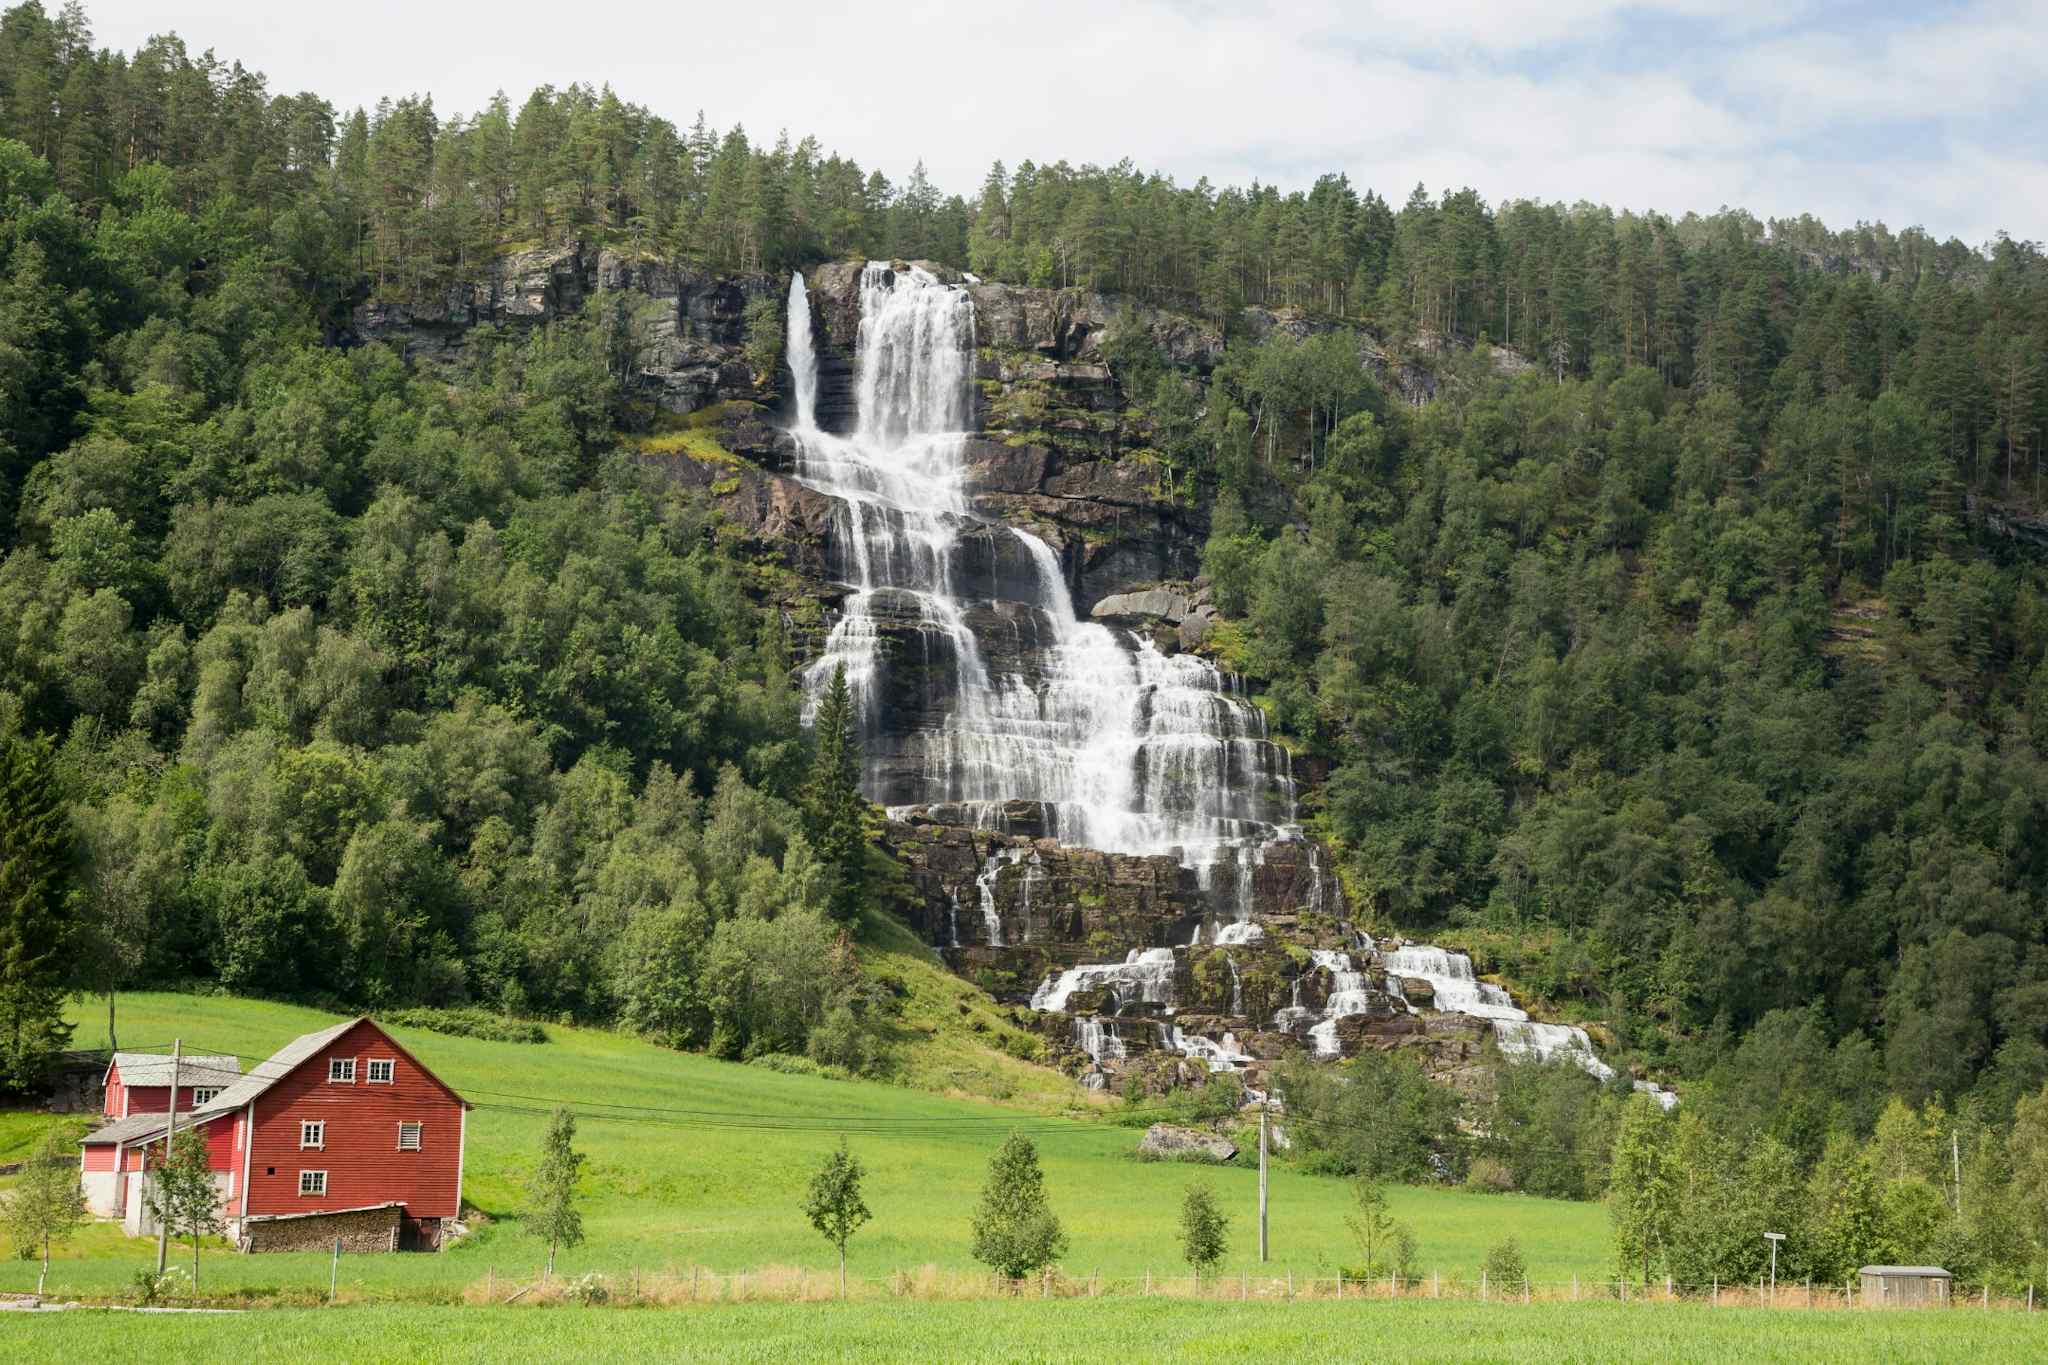 Voss, Norway
Canva - https://www.canva.com/photos/MADAs8nJiV8-tvindefossen-waterfall-near-voss-norway-/